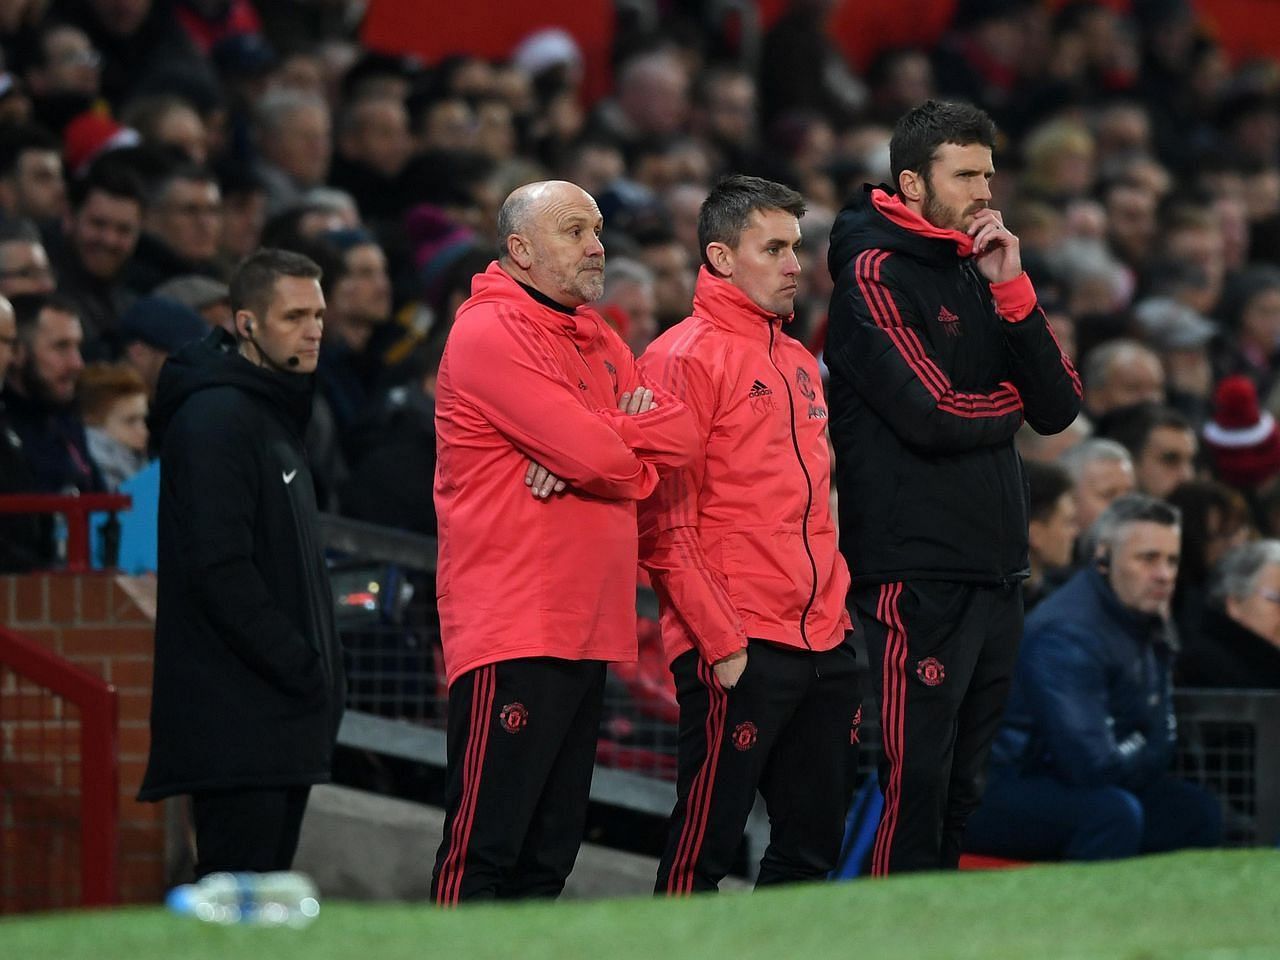 Michael Carrick will begin his tenure as caretaker manager of Manchester United against Villarreal